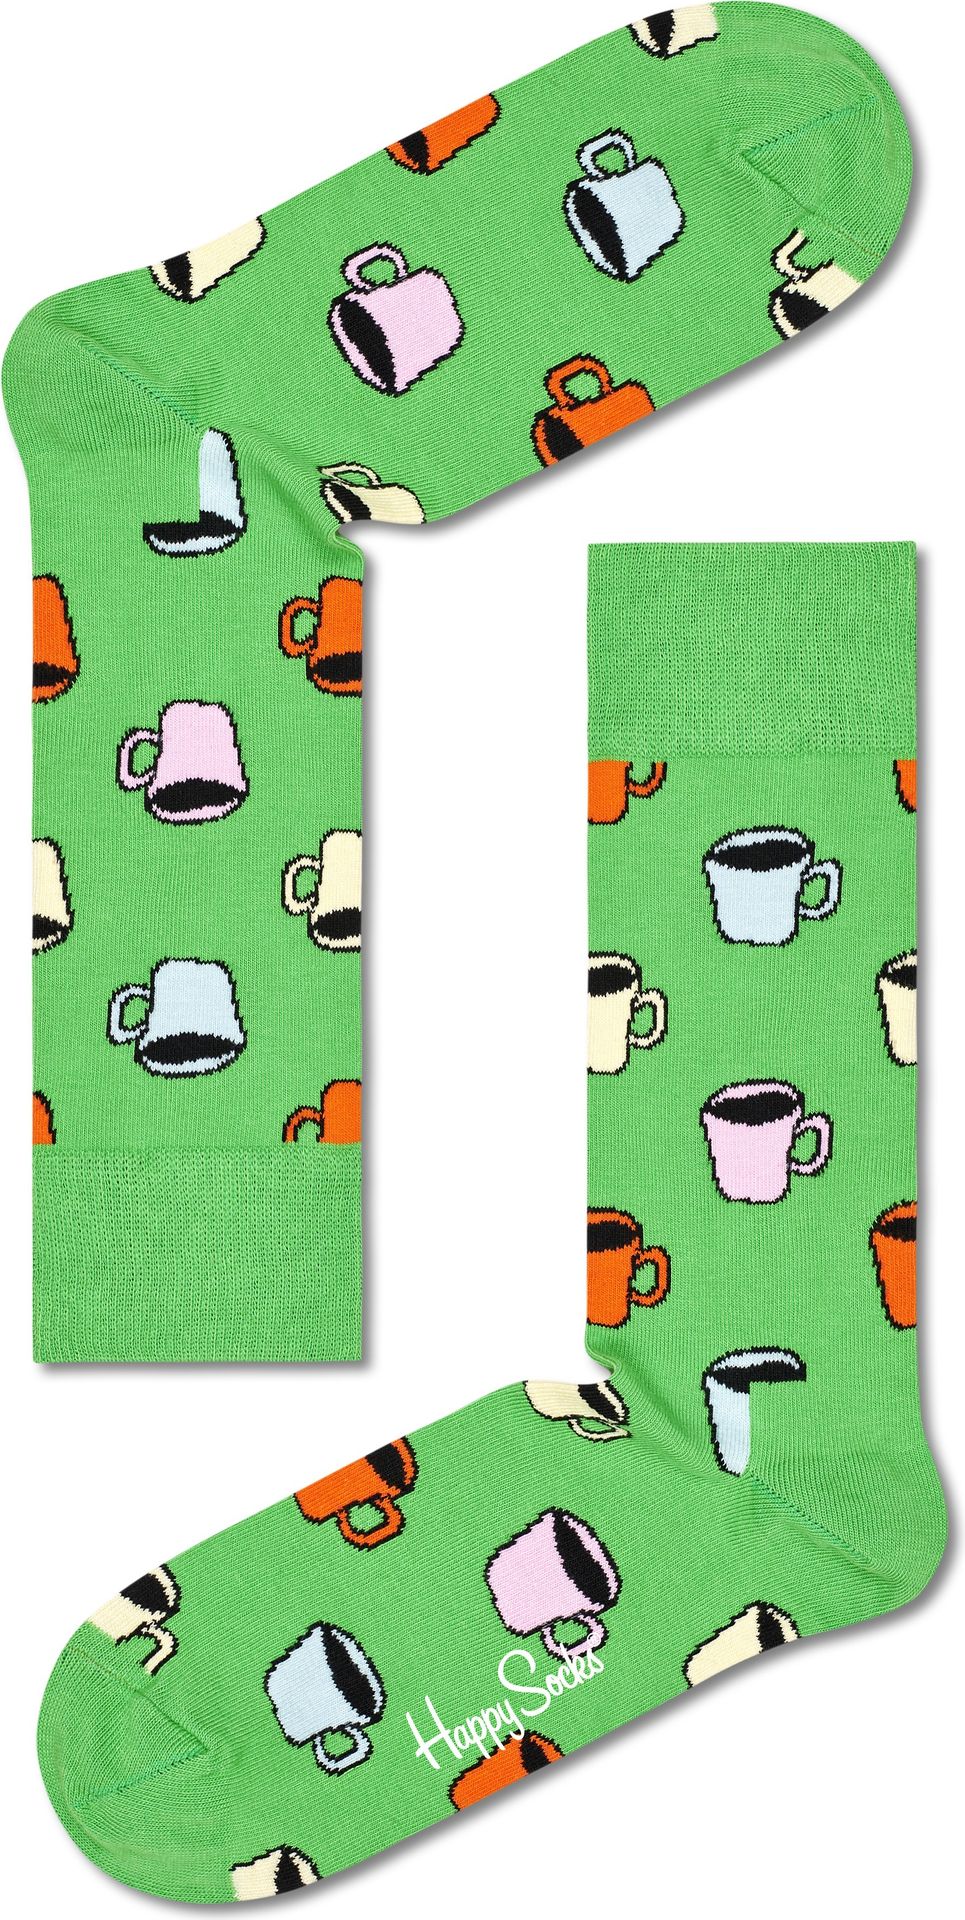 Happy Socks My Cup Of Tea Multi-7303 41-46